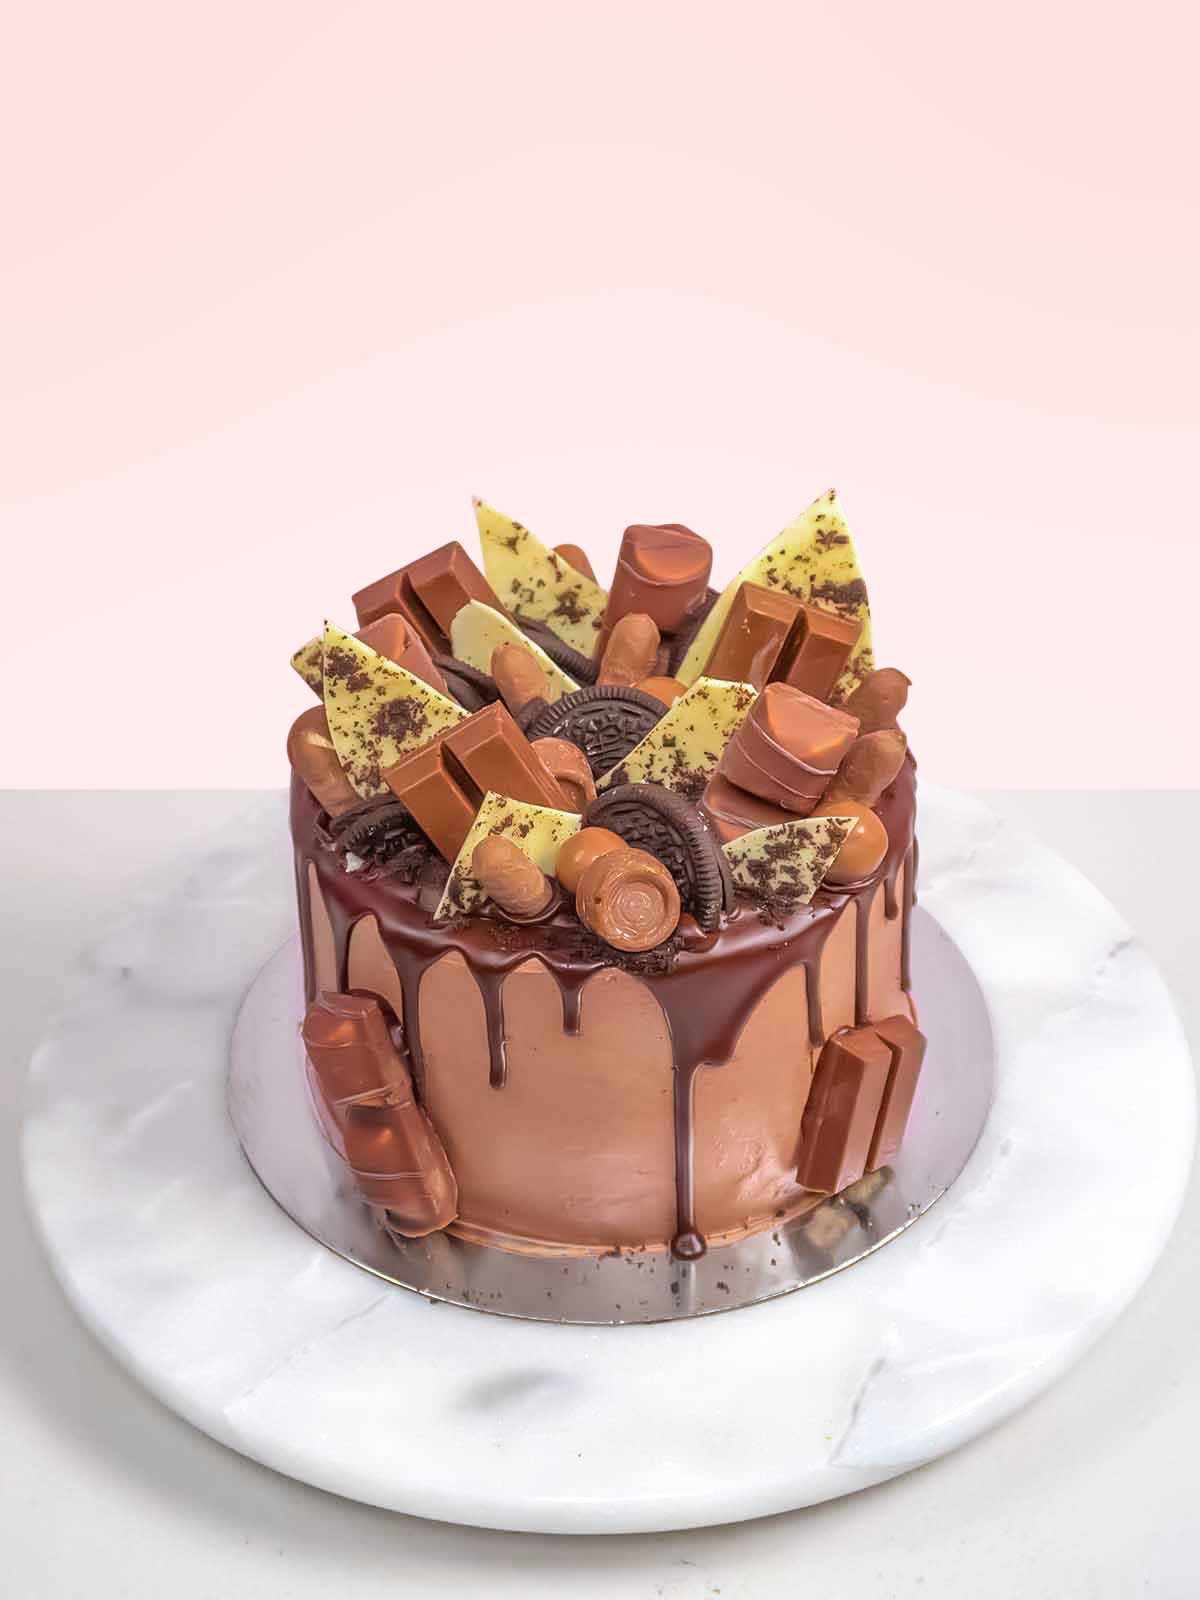 24 Fun Themed Kids Birthday Cake Ideas - Ideal Me